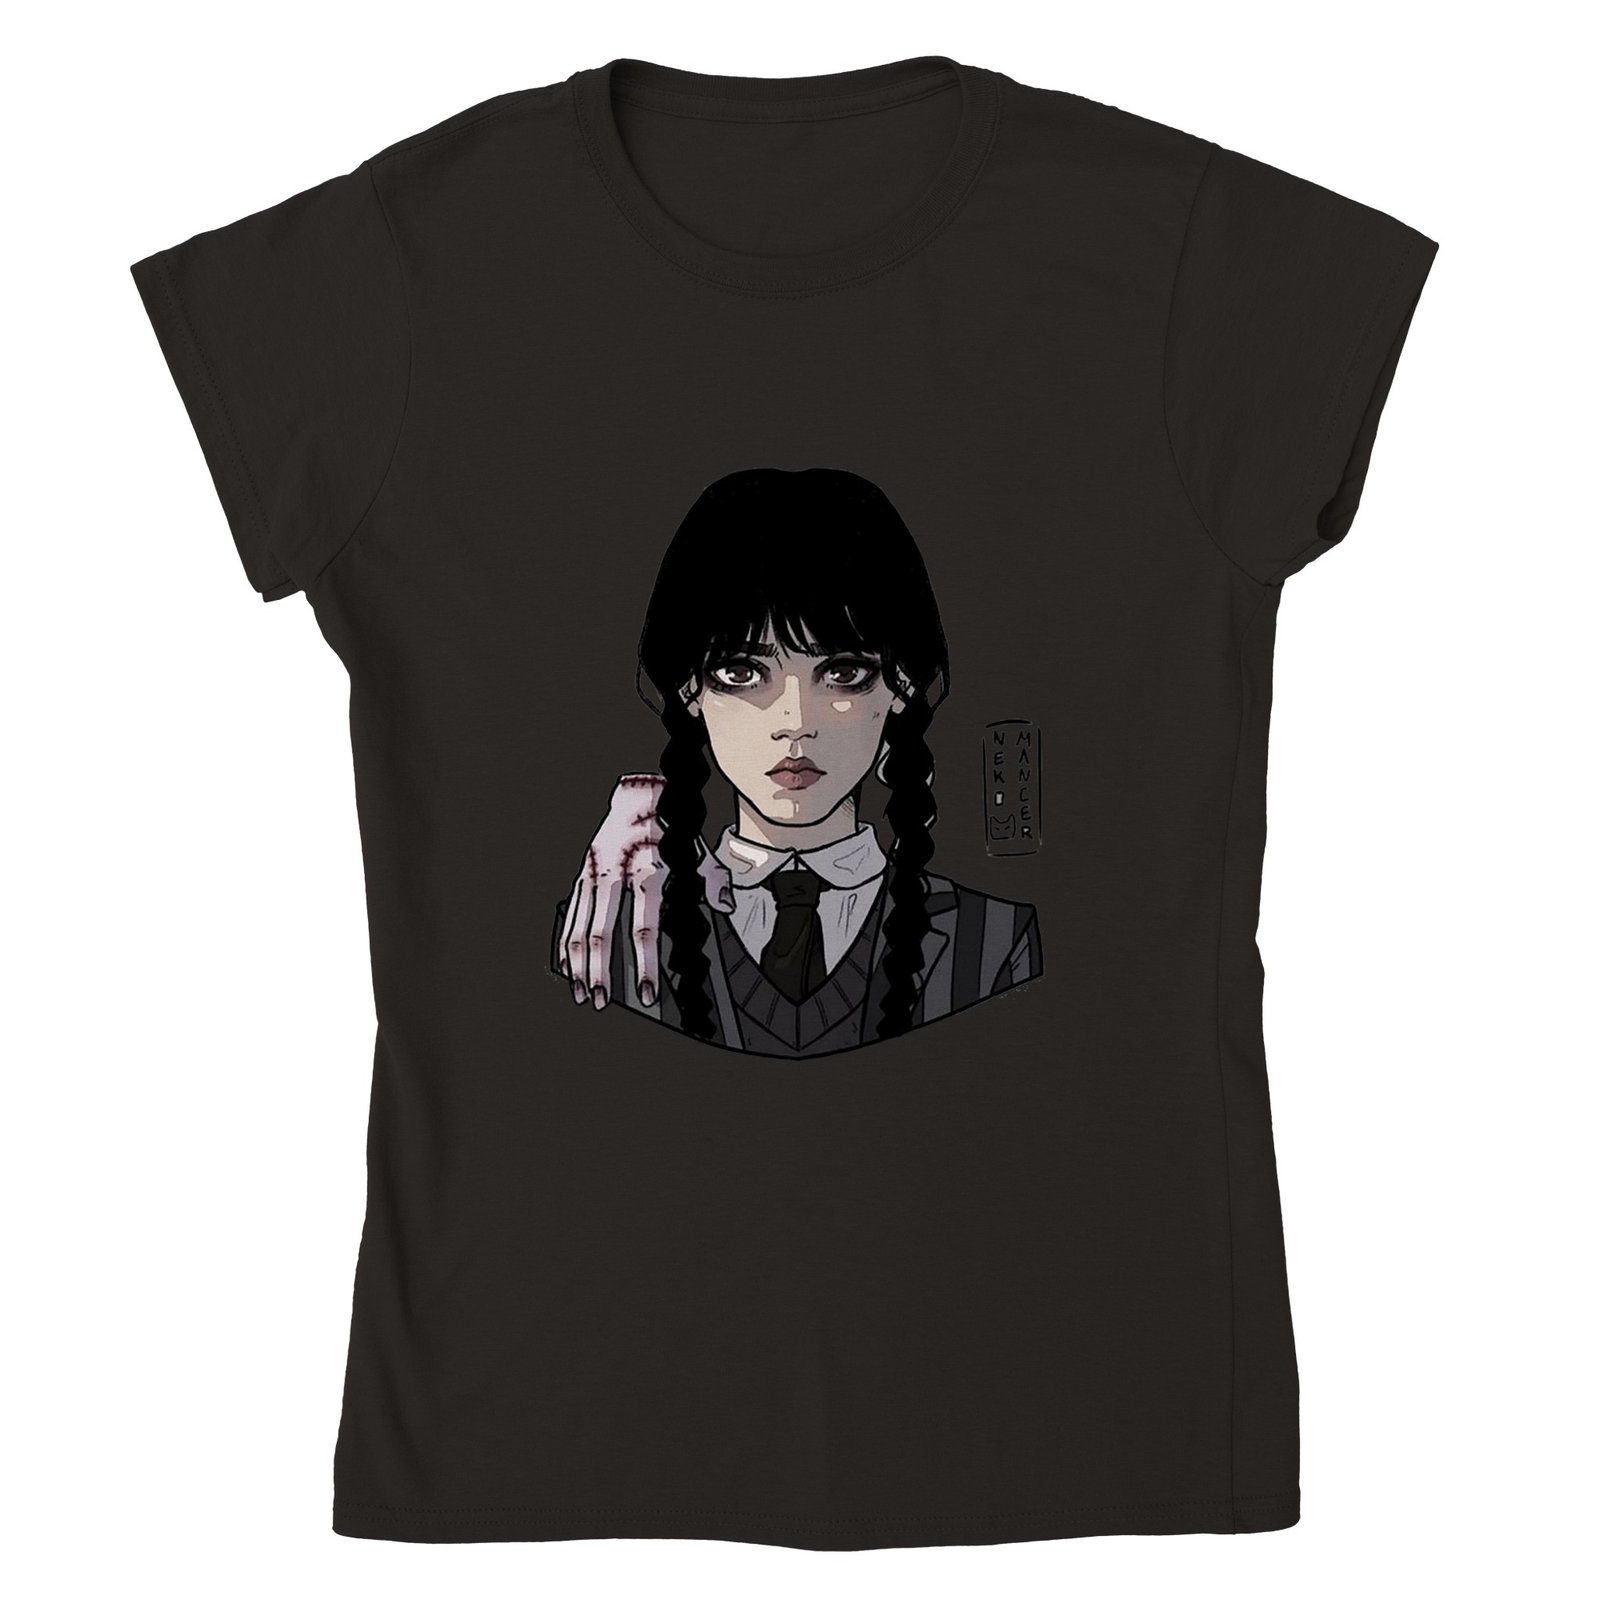 T-shirt Mercredi Addams femme